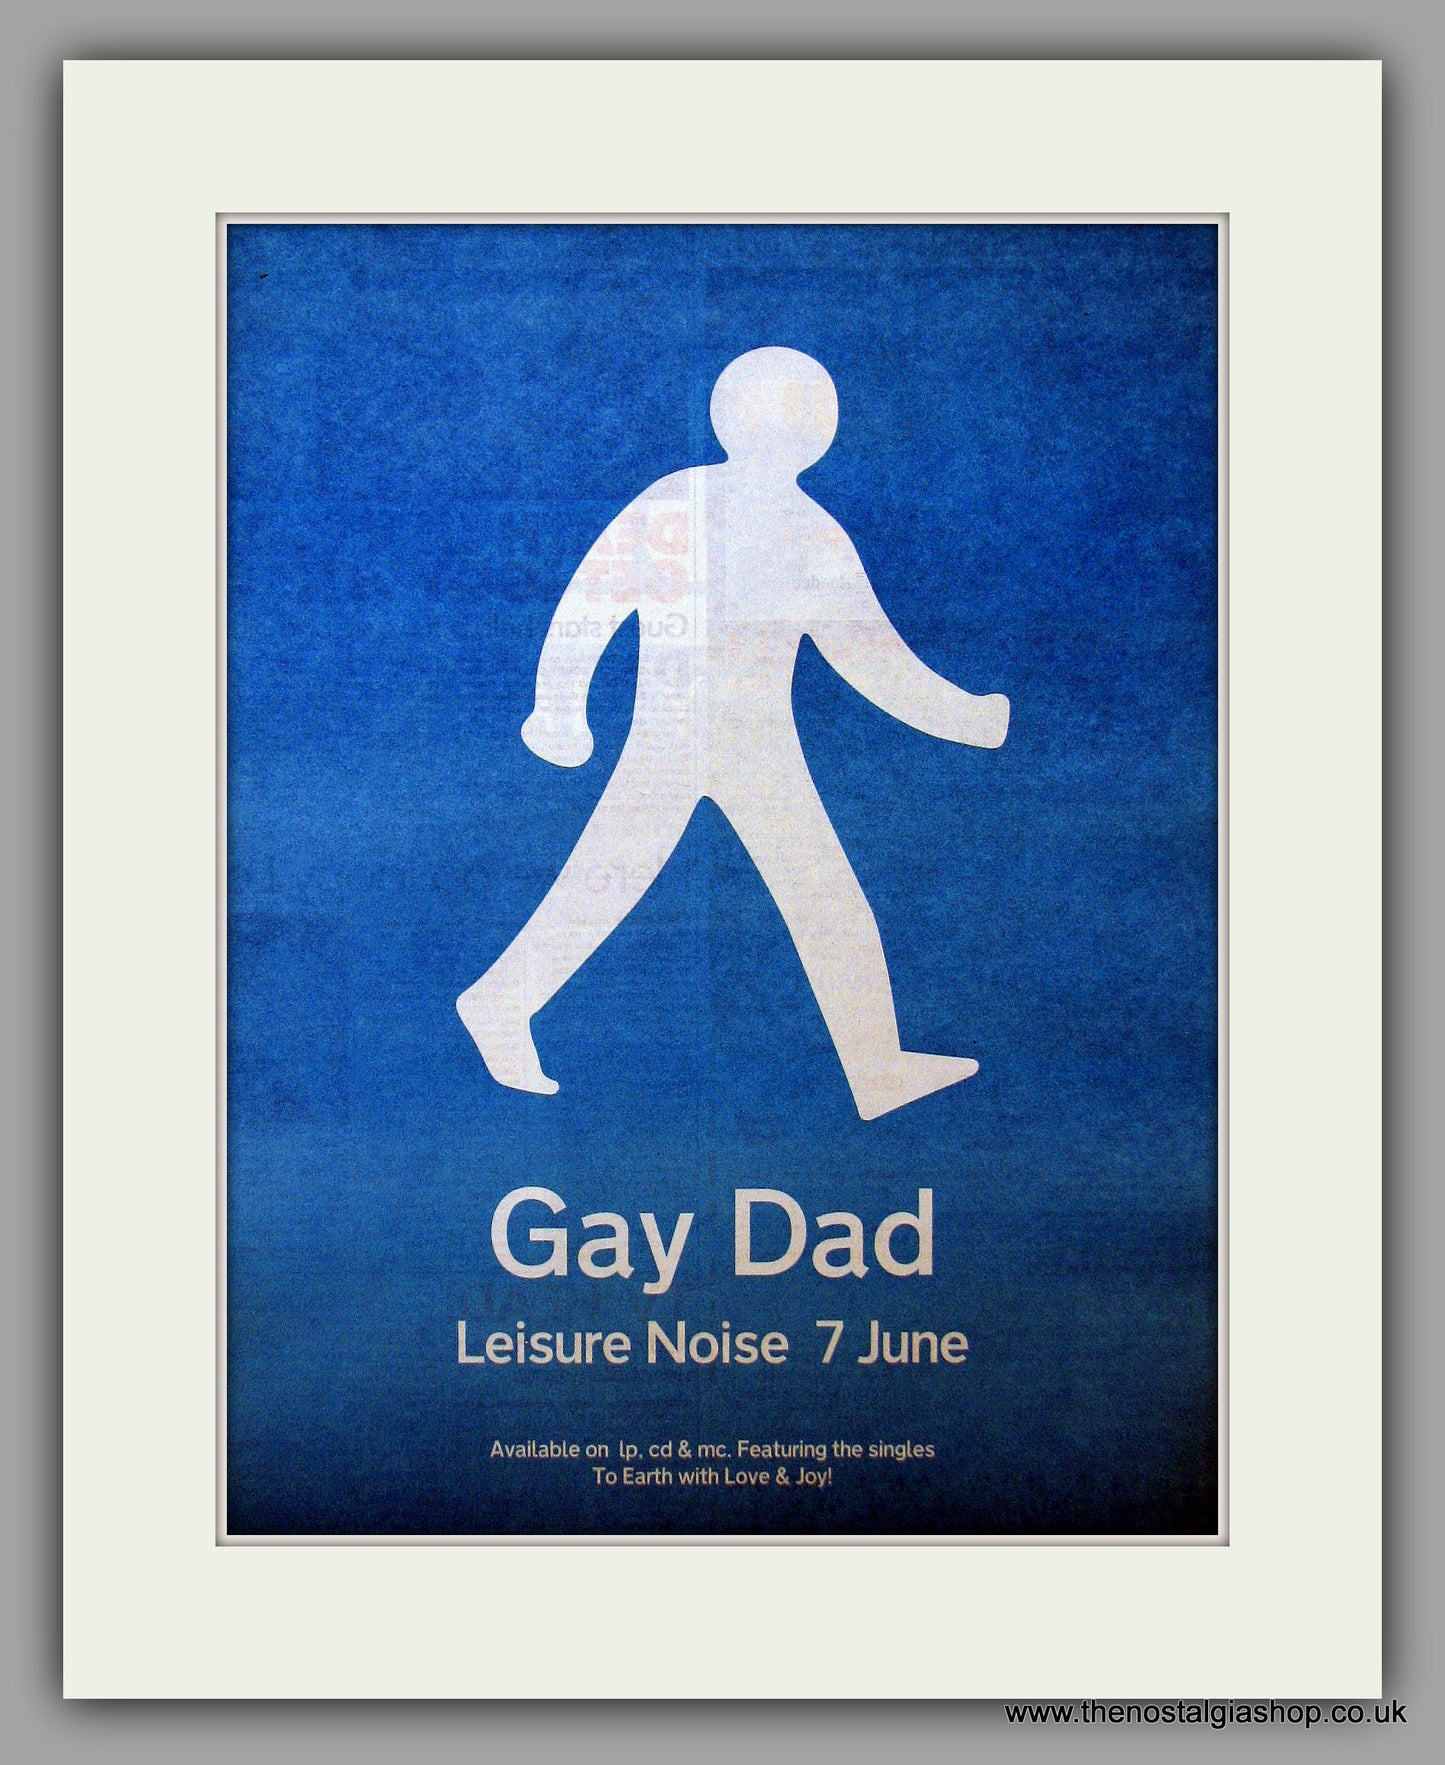 Gay Dad - Leisure Noise. Original Vintage Advert 1999 (ref AD56095)